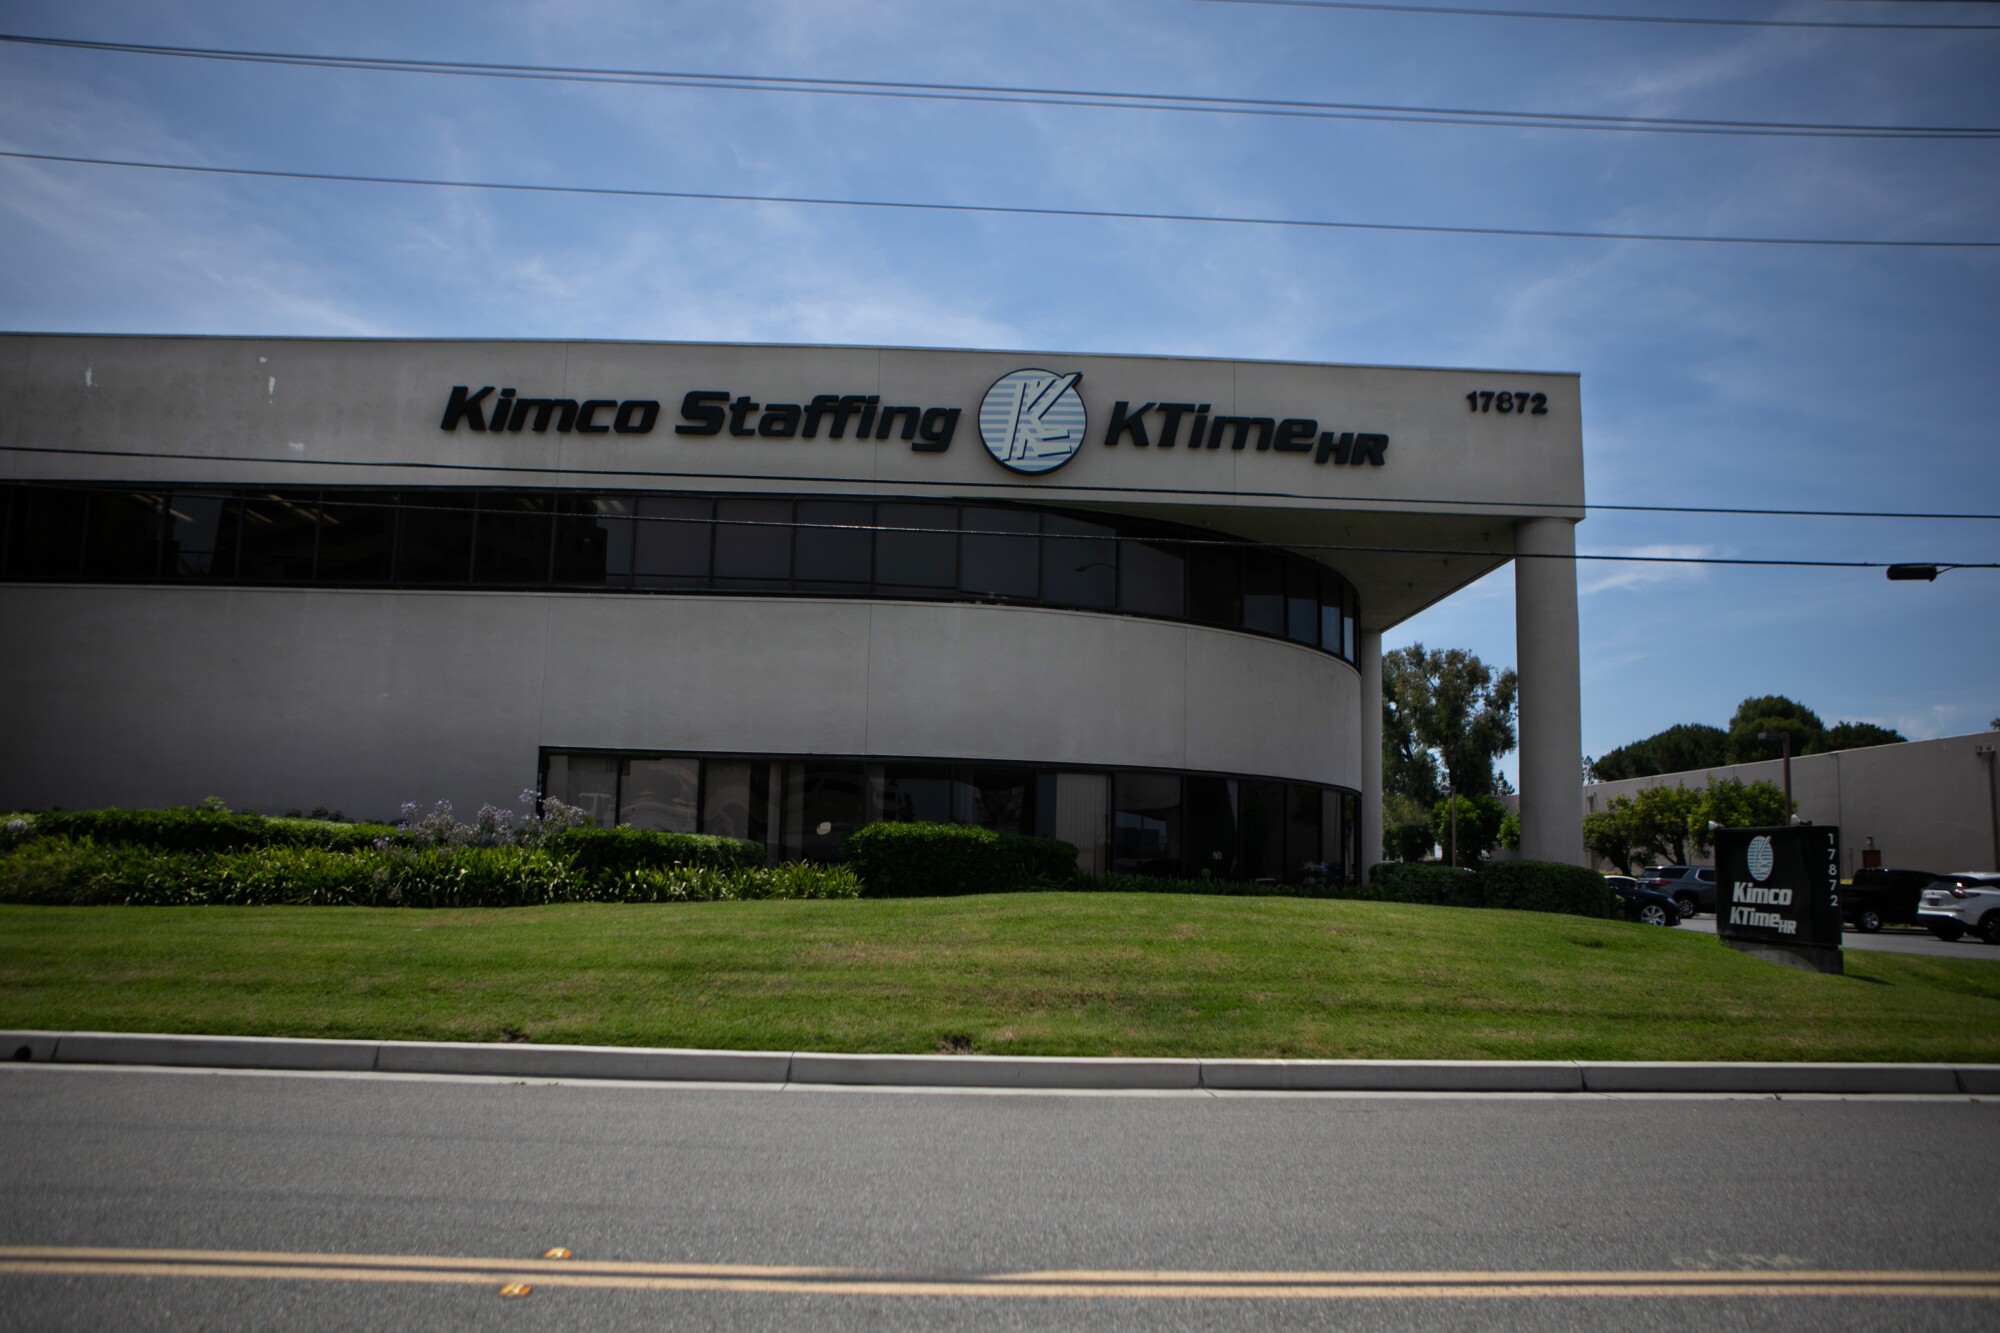  Kimco Staffing headquarters